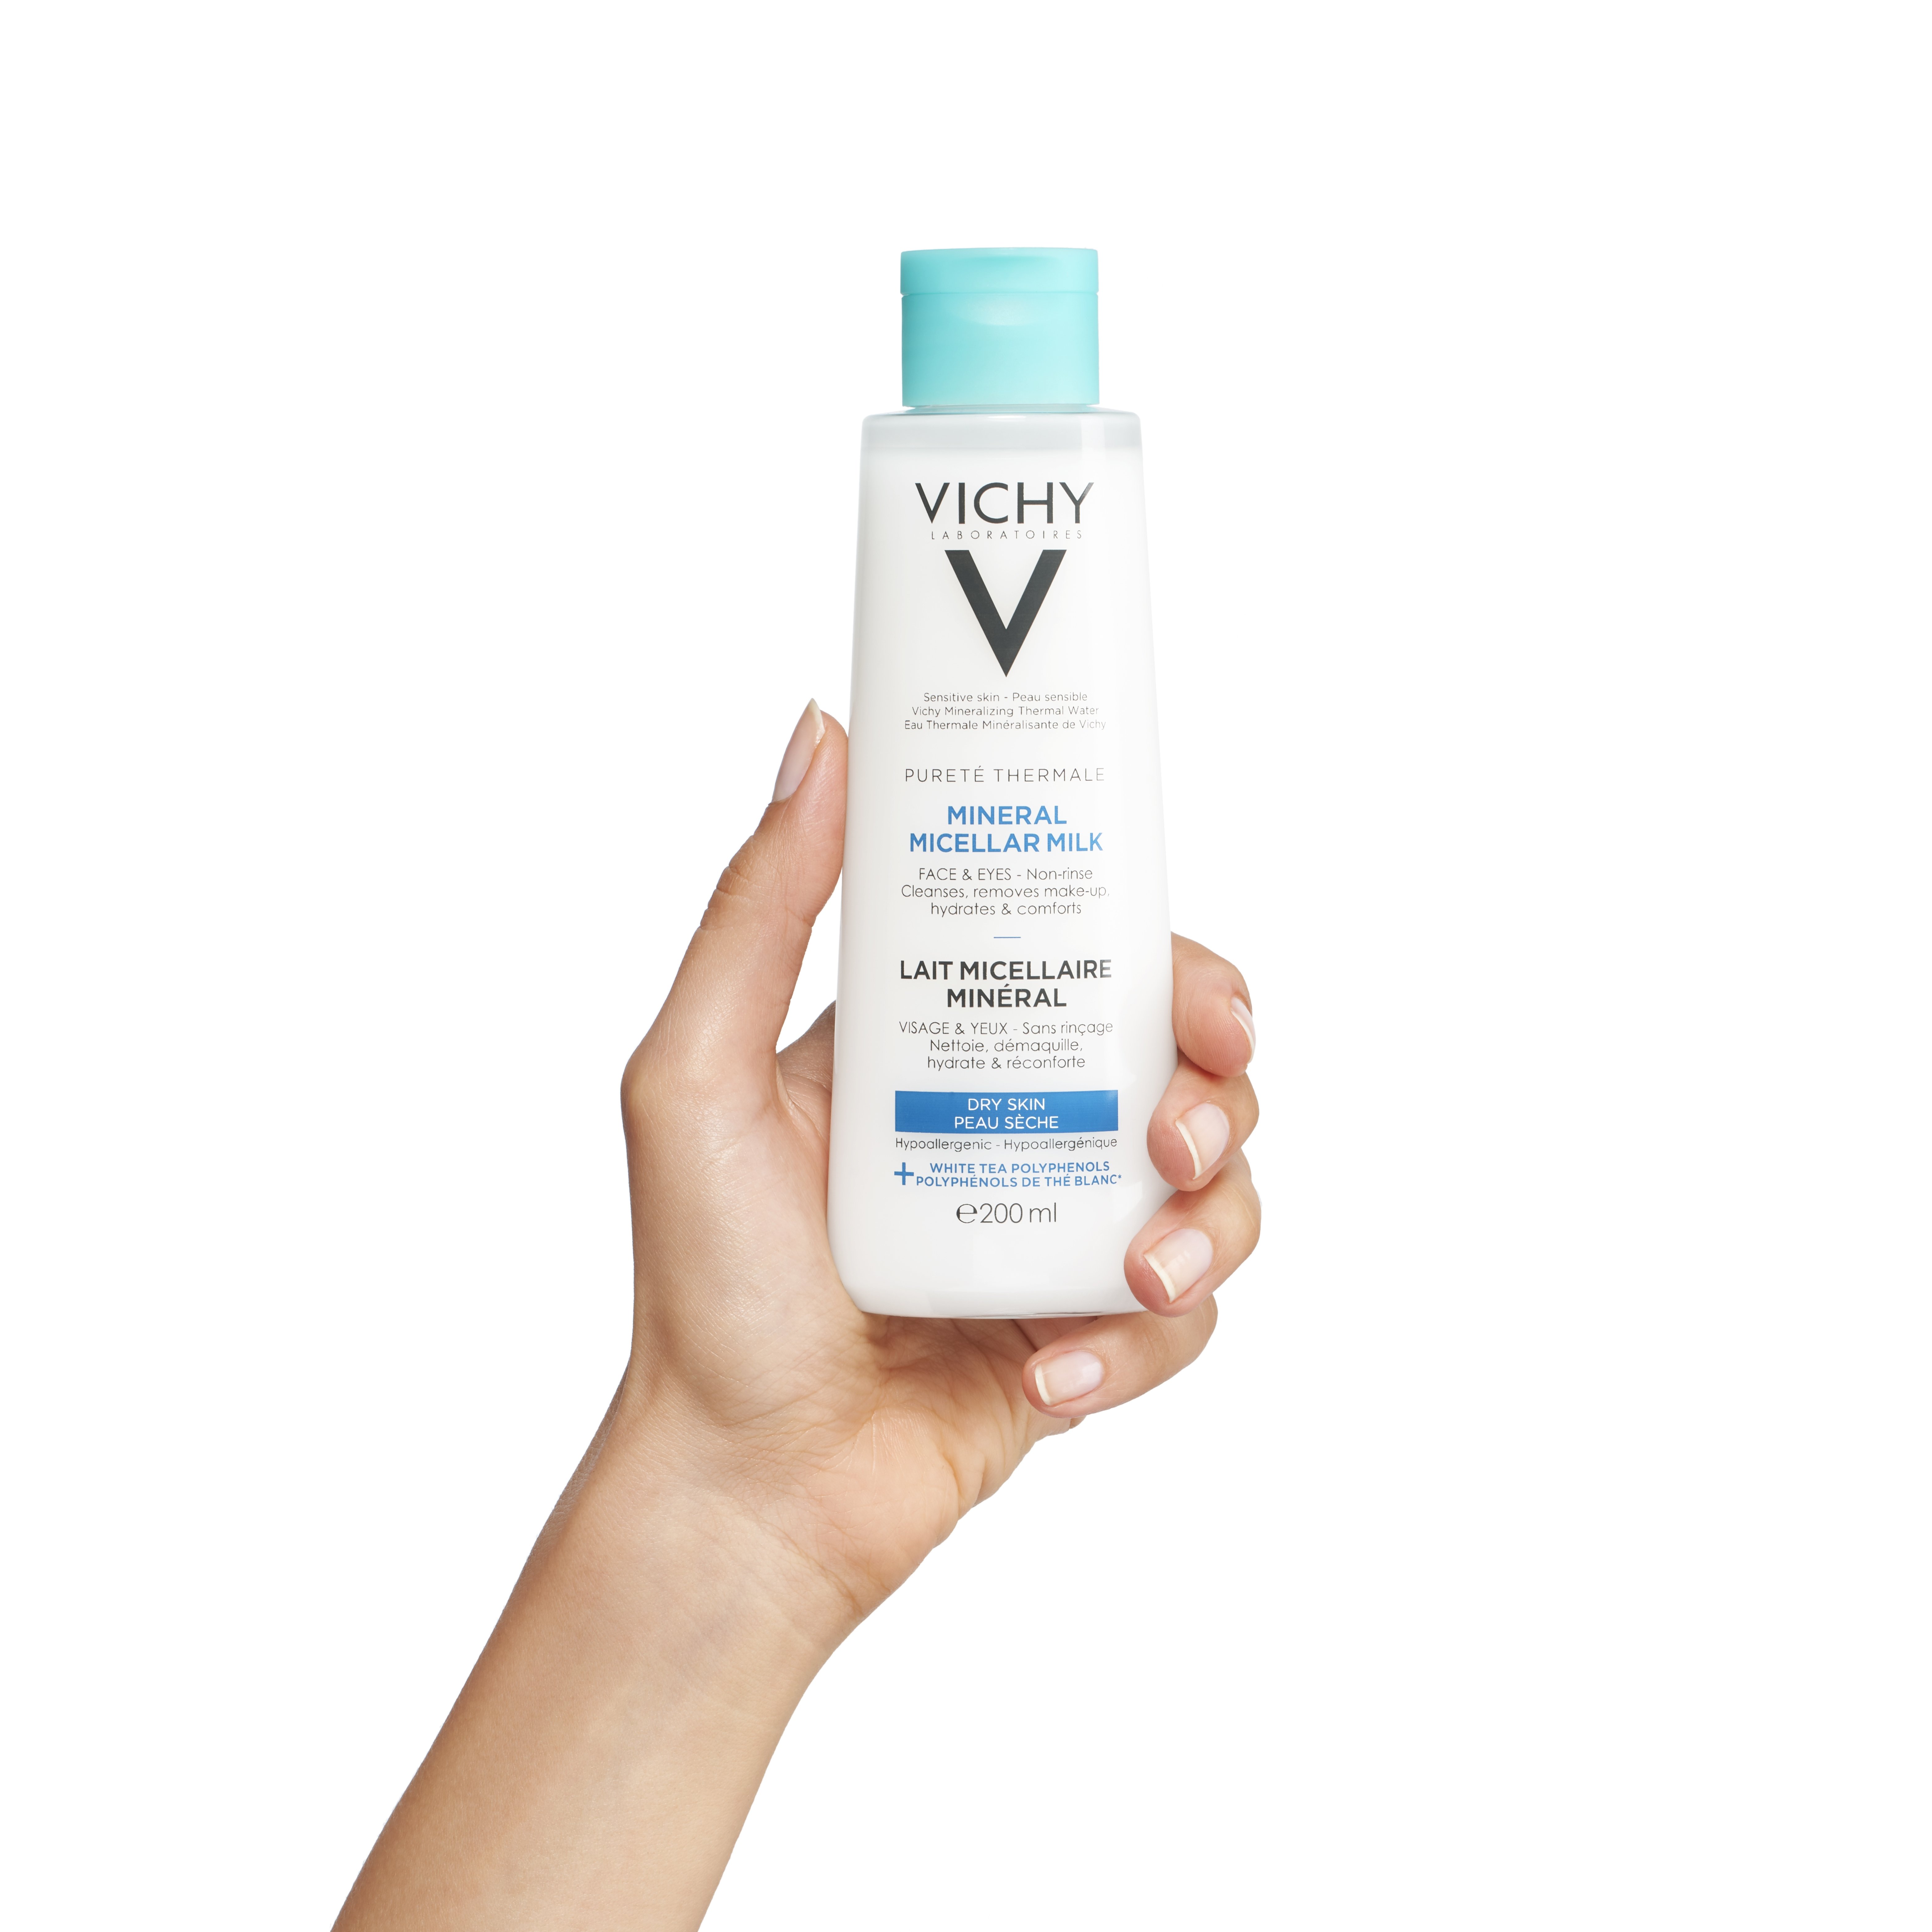 Мицеллярное молочко Vichy Purete Thermale, для сухой кожи, 200 мл - фото 6